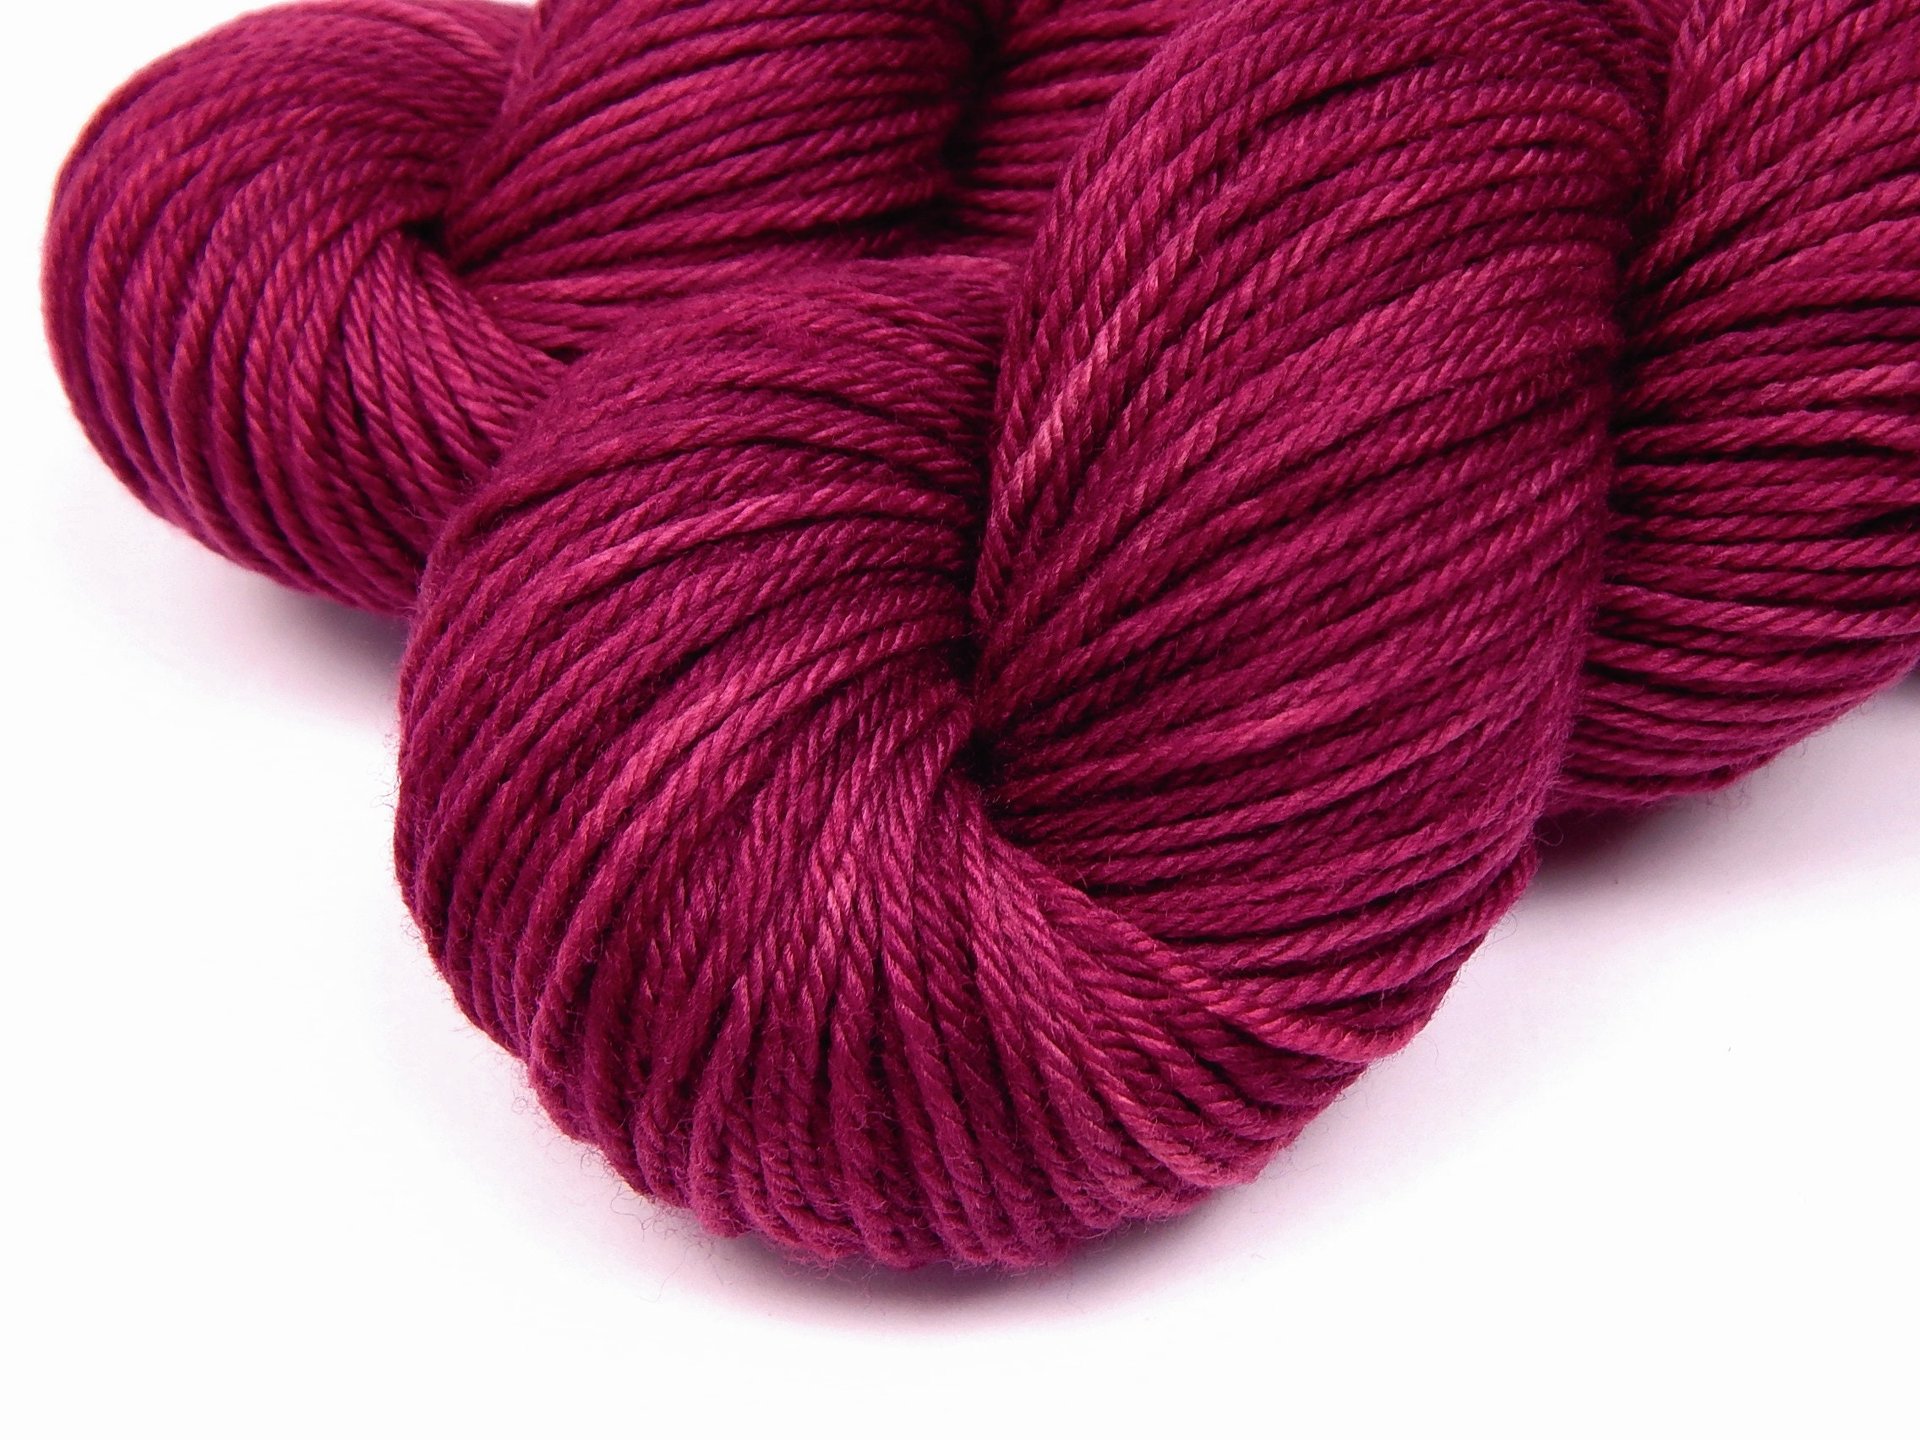 Hand Dyed Yarn, Worsted Weight 100% Superwash Merino Wool - Plumberry - Indie Dyed Tonal Berry Red Knitting Yarn, Knitter Gift